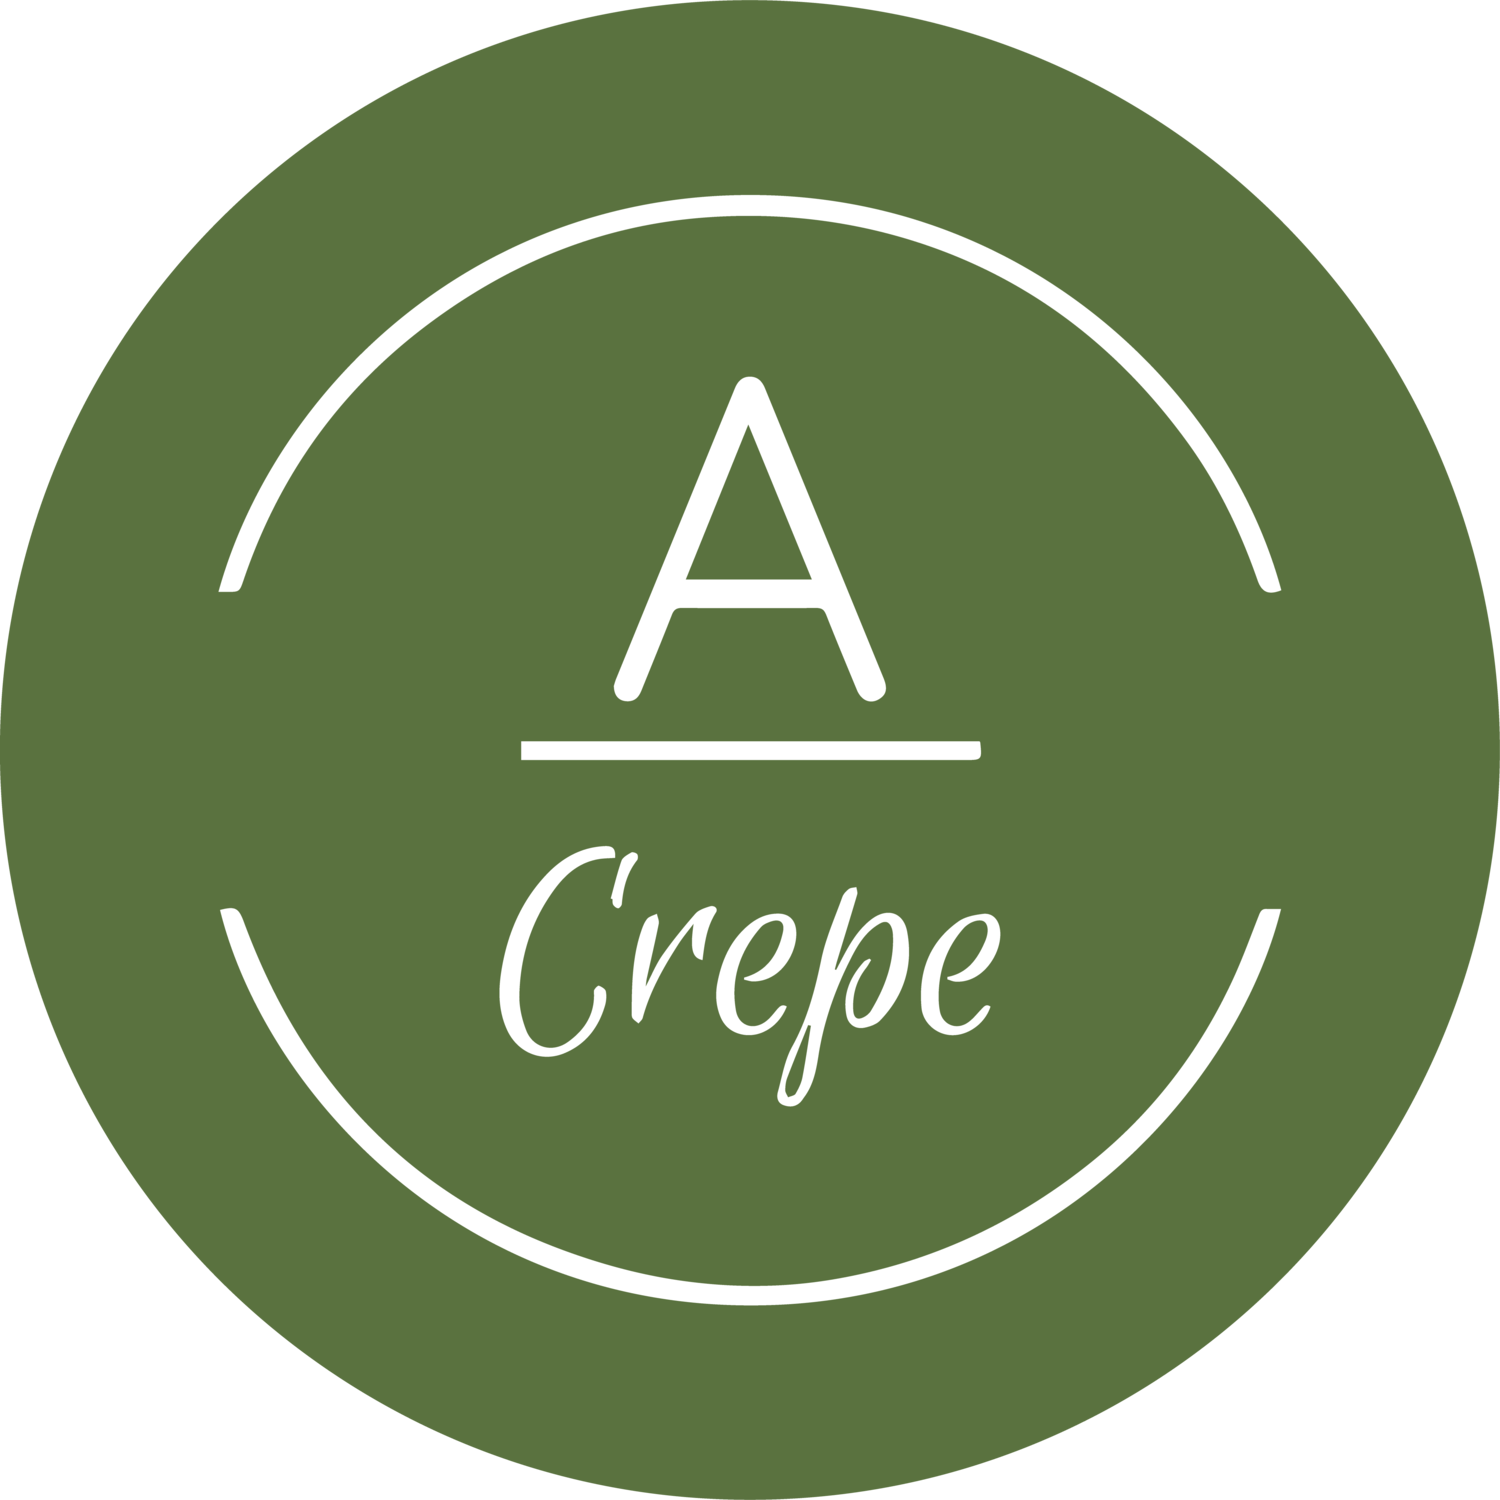 A-Crepe